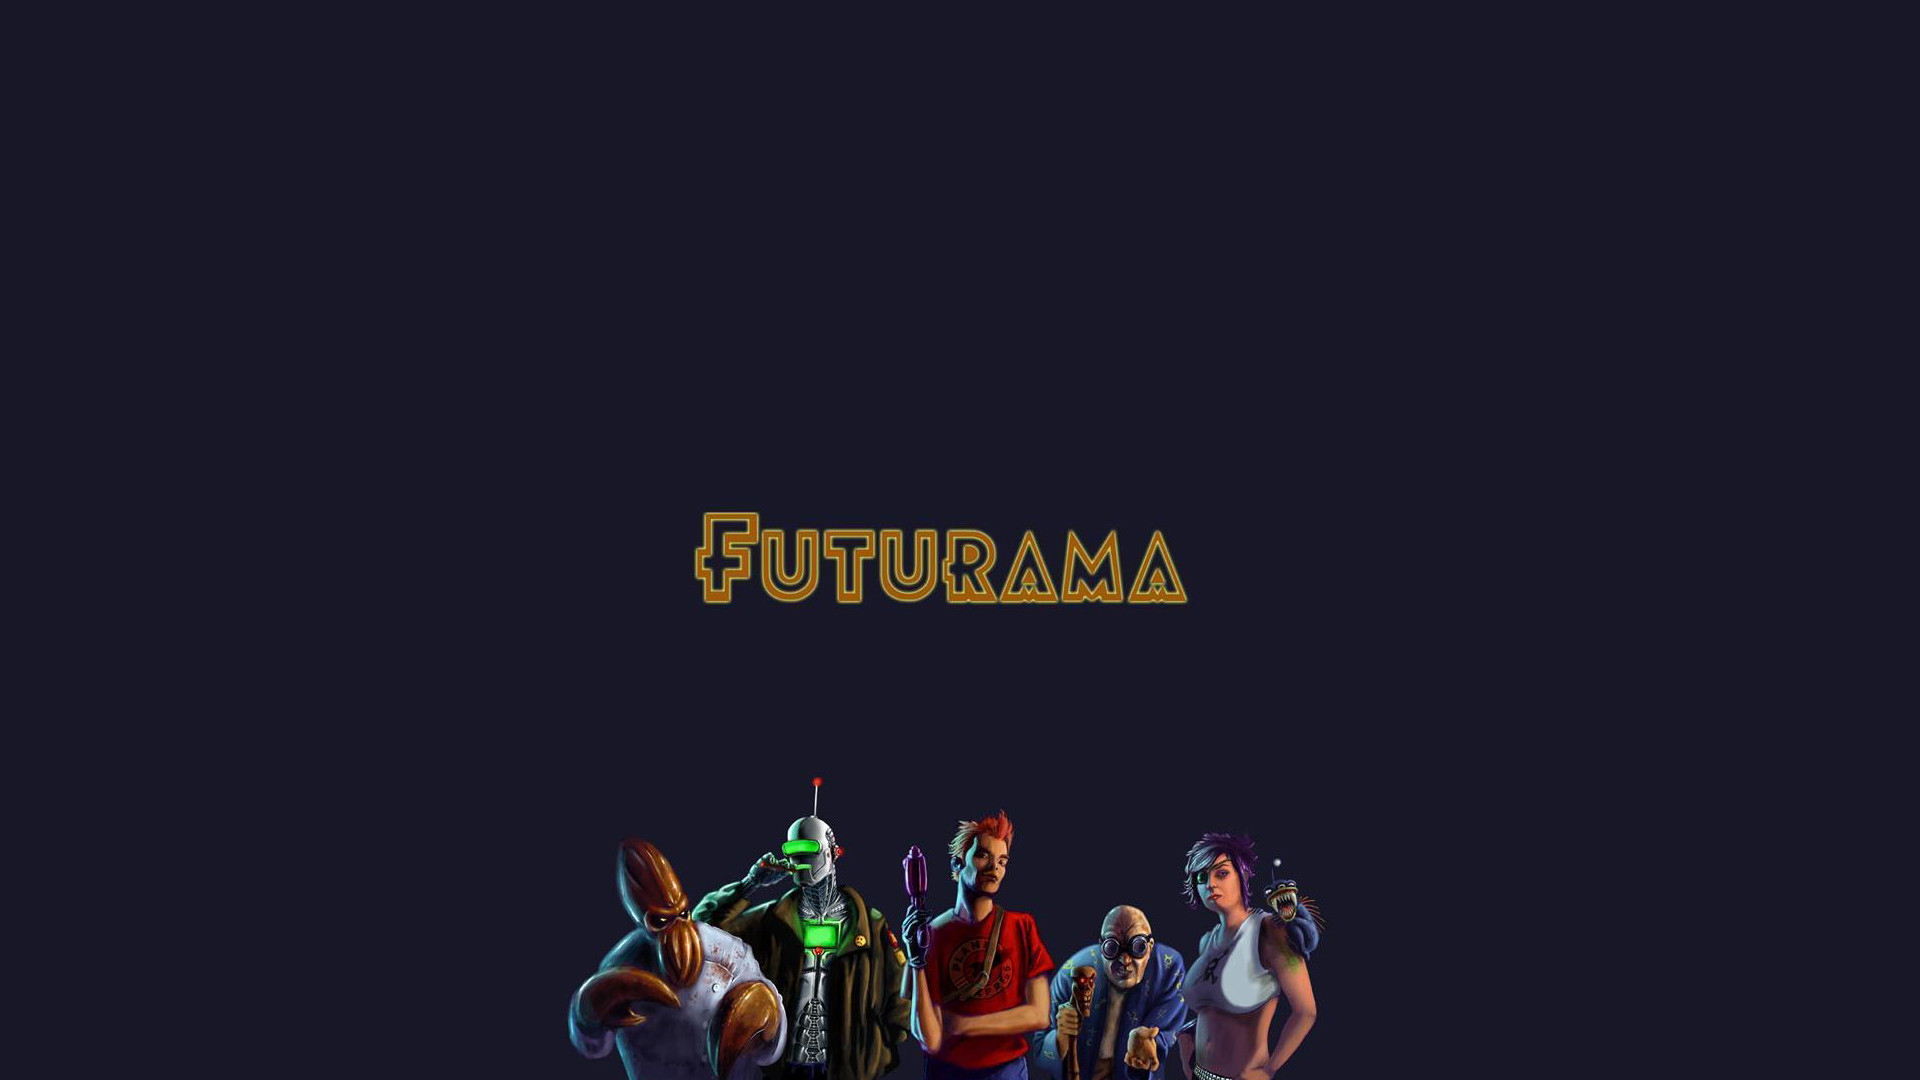 1920x1080 Futurama HD Wallpaper | Background Image |  | ID:89380 - Wallpaper  Abyss